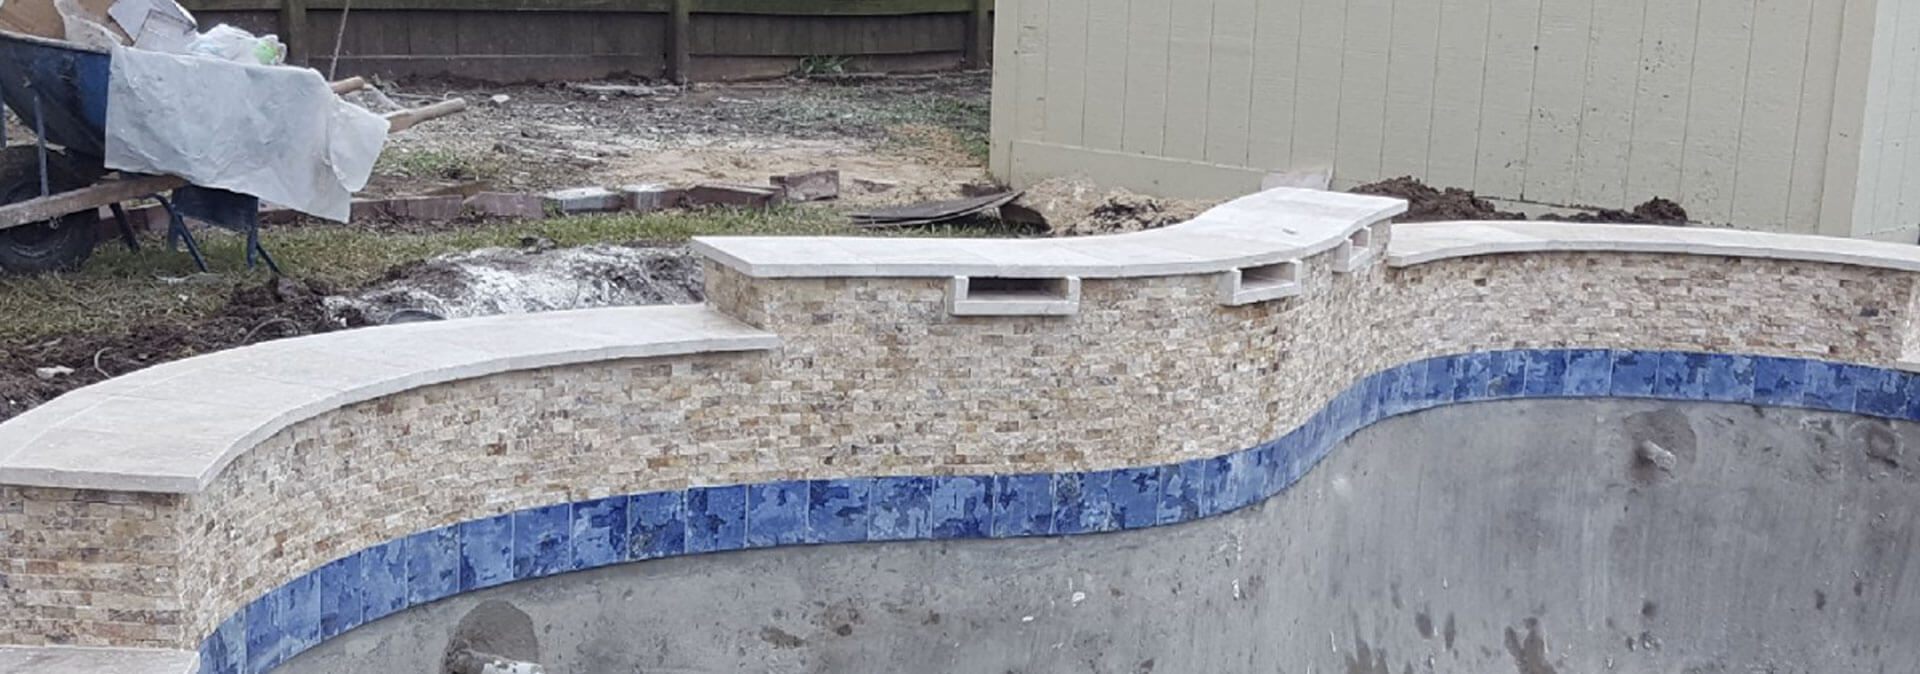 Pearland, TX concrete pool deck resurfacing